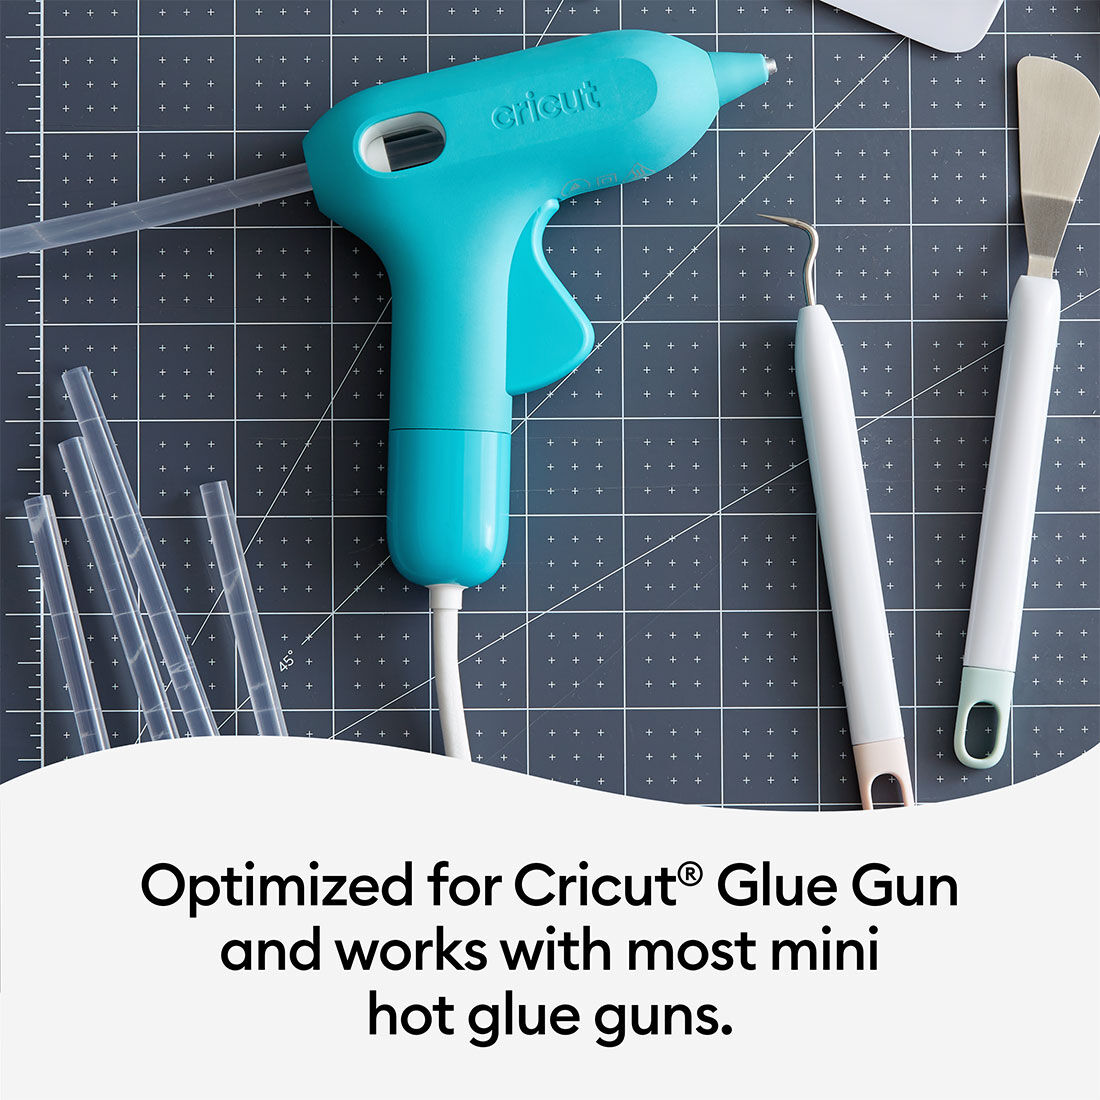 Mini Glue Sticks (30 ct)